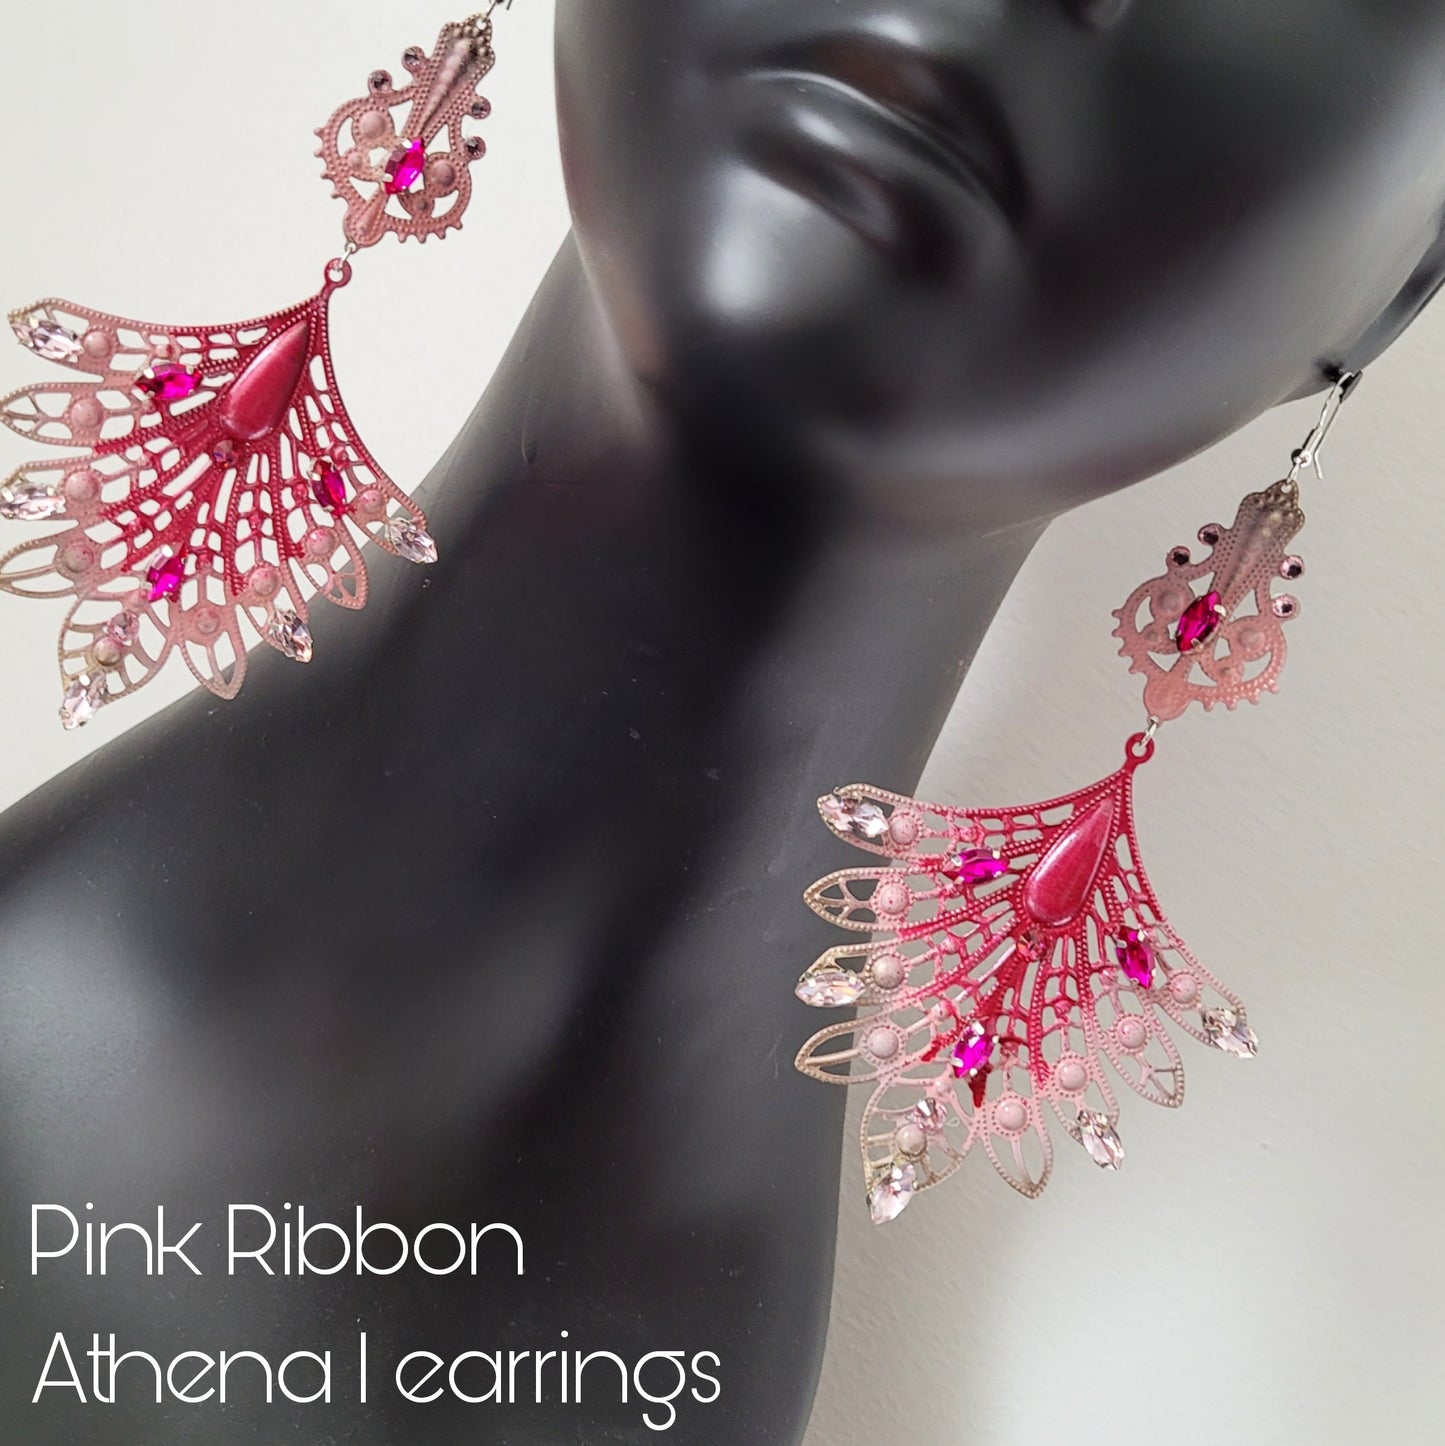 Deusa ex Machina collection: The Pink Ribbon Athena earrings